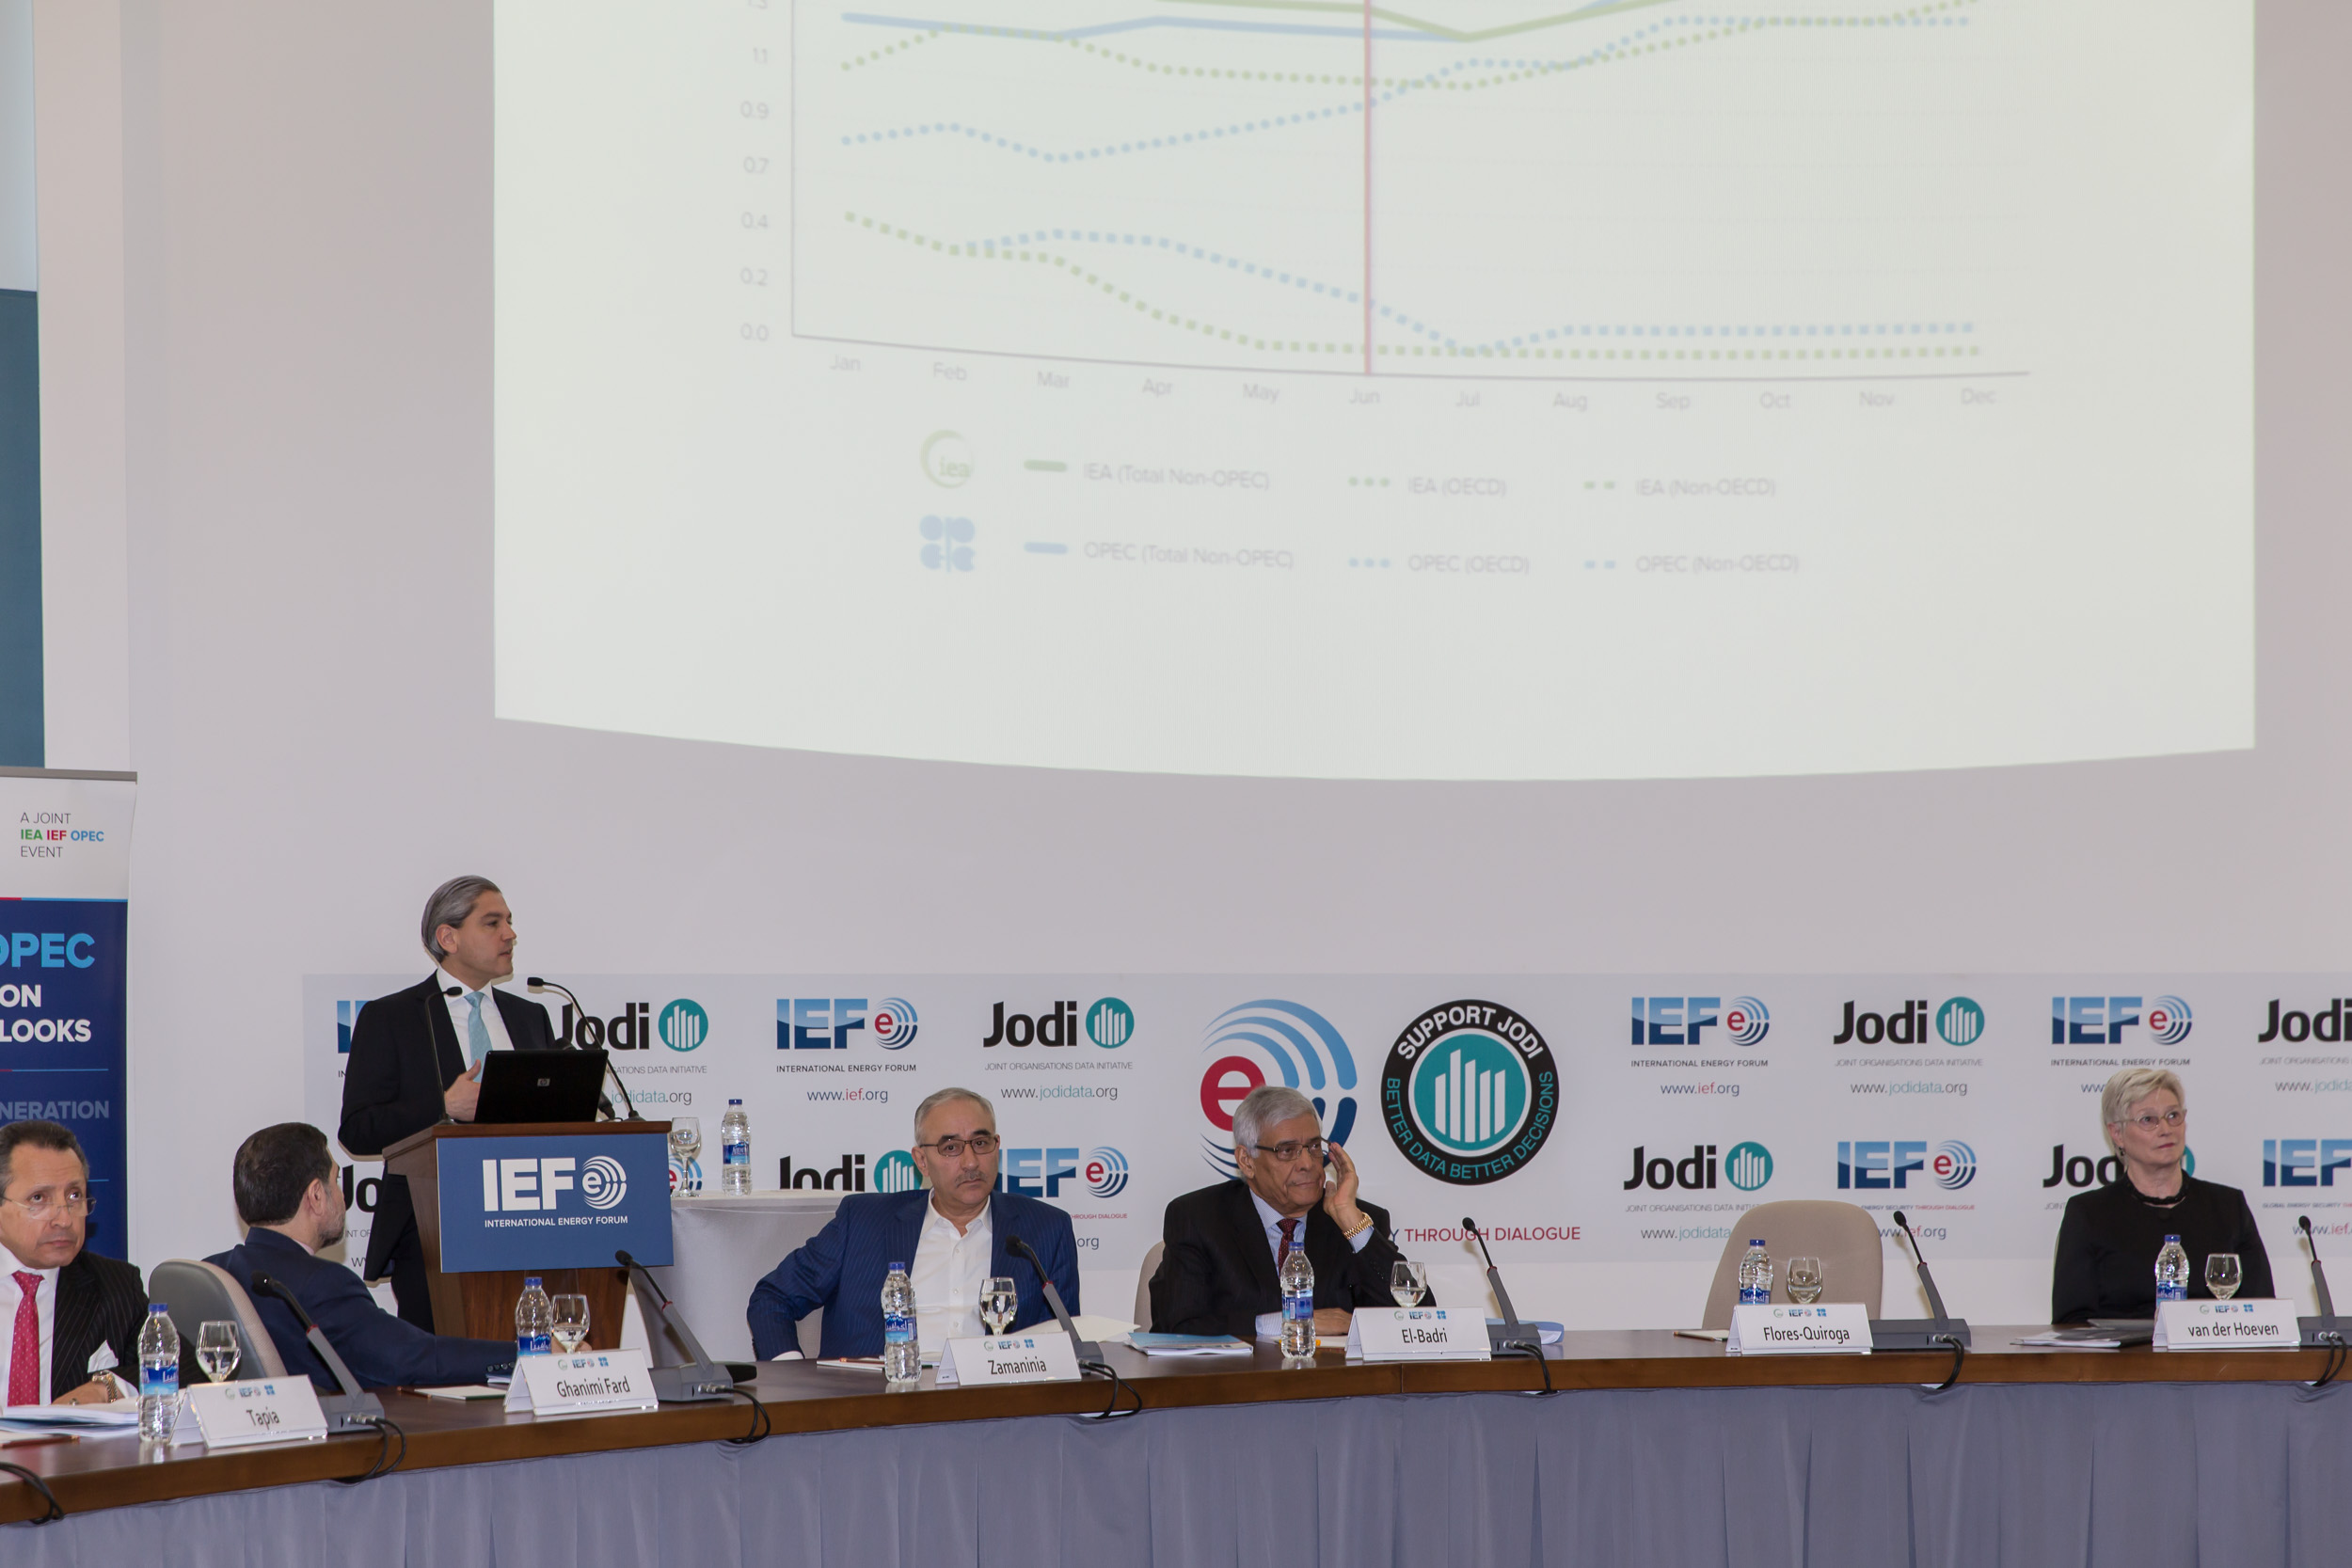 IEA IEF OPEC Symposium_21003